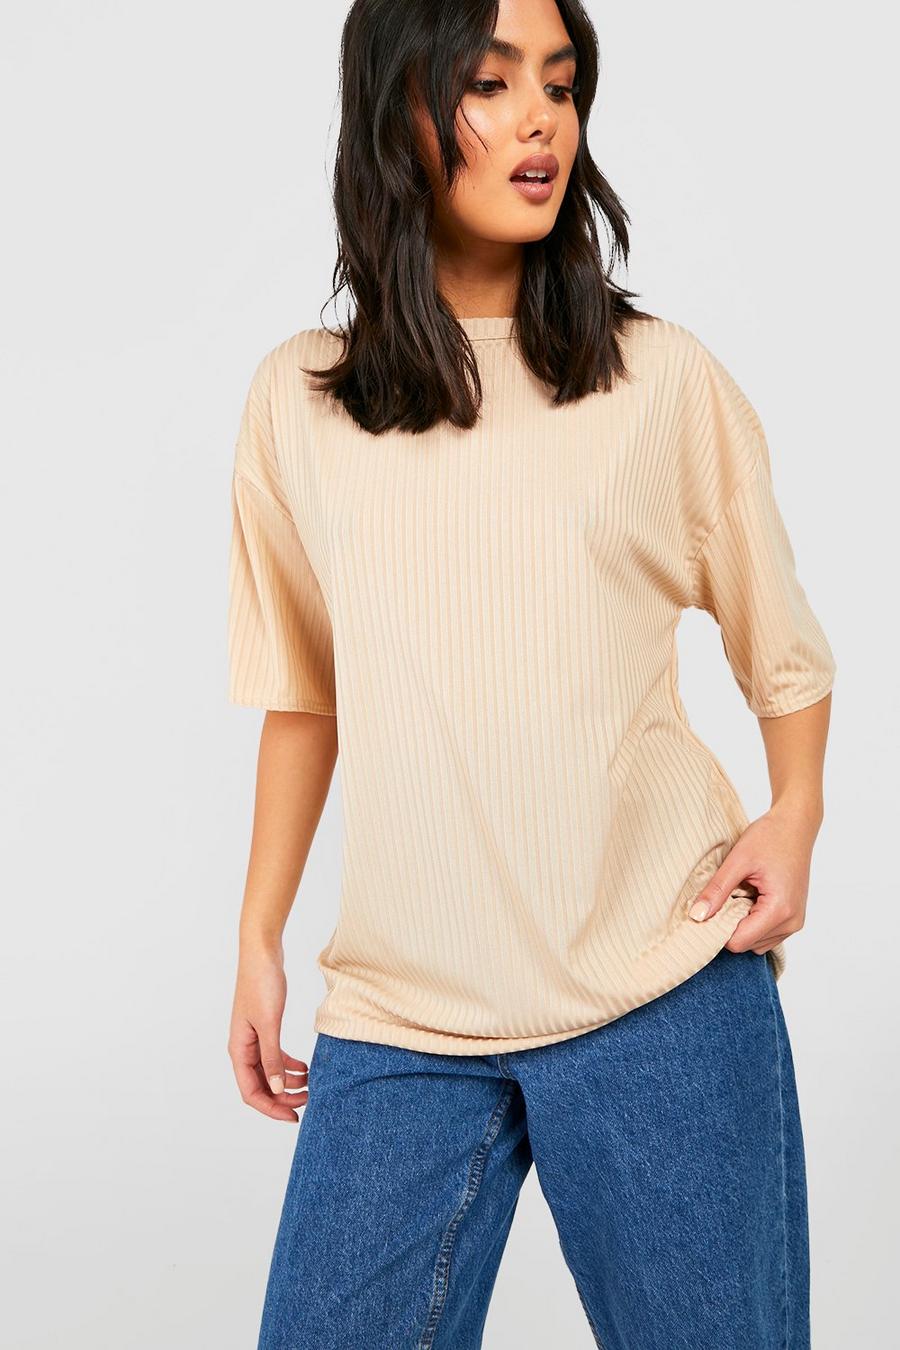 discount 70% WOMEN FASHION Shirts & T-shirts Blouse Print Multicolored XL Sfera blouse 